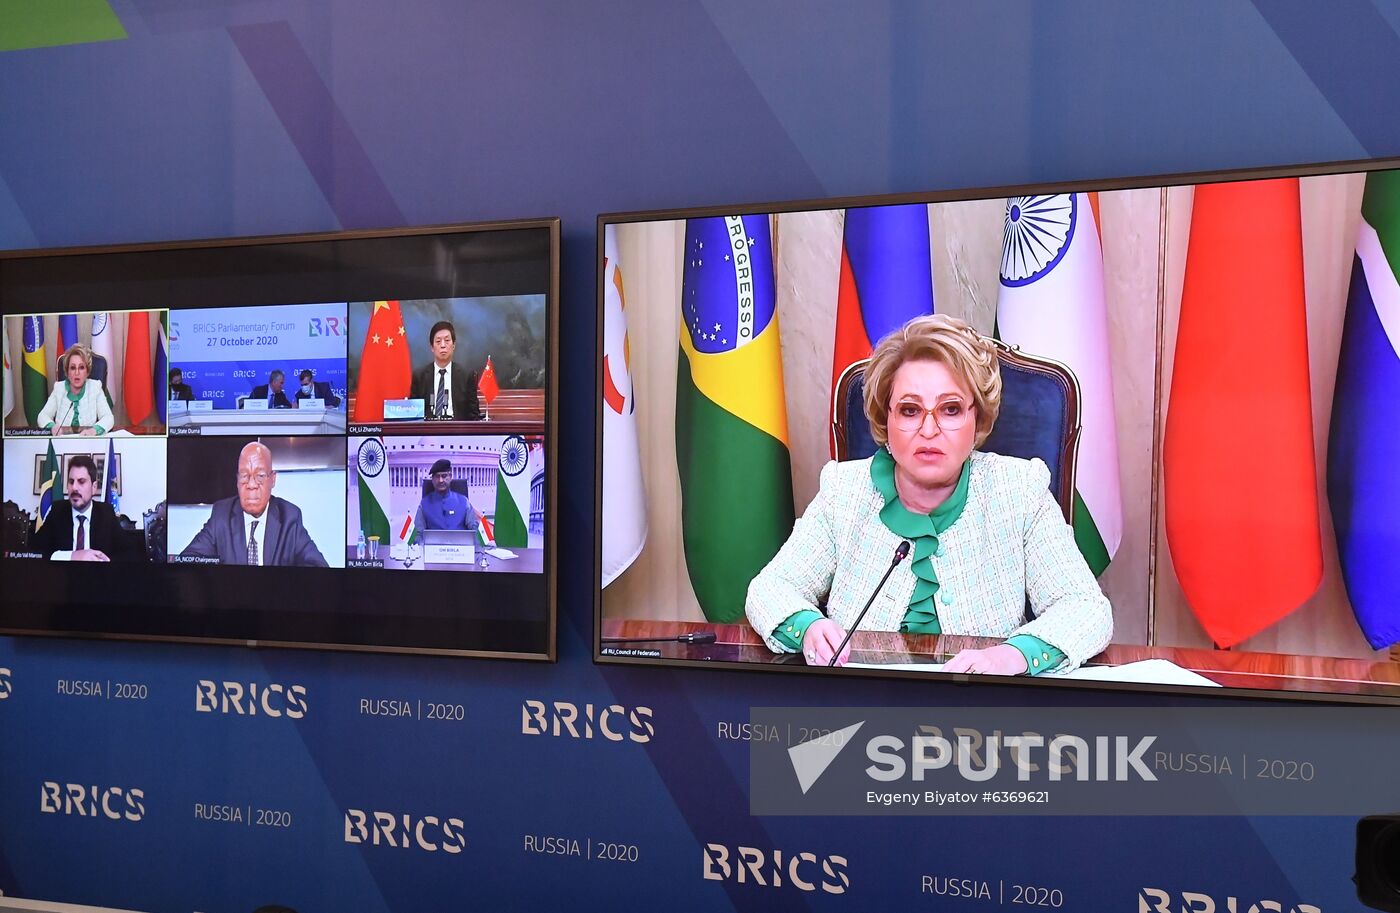 BRICS Parliamentary Forum